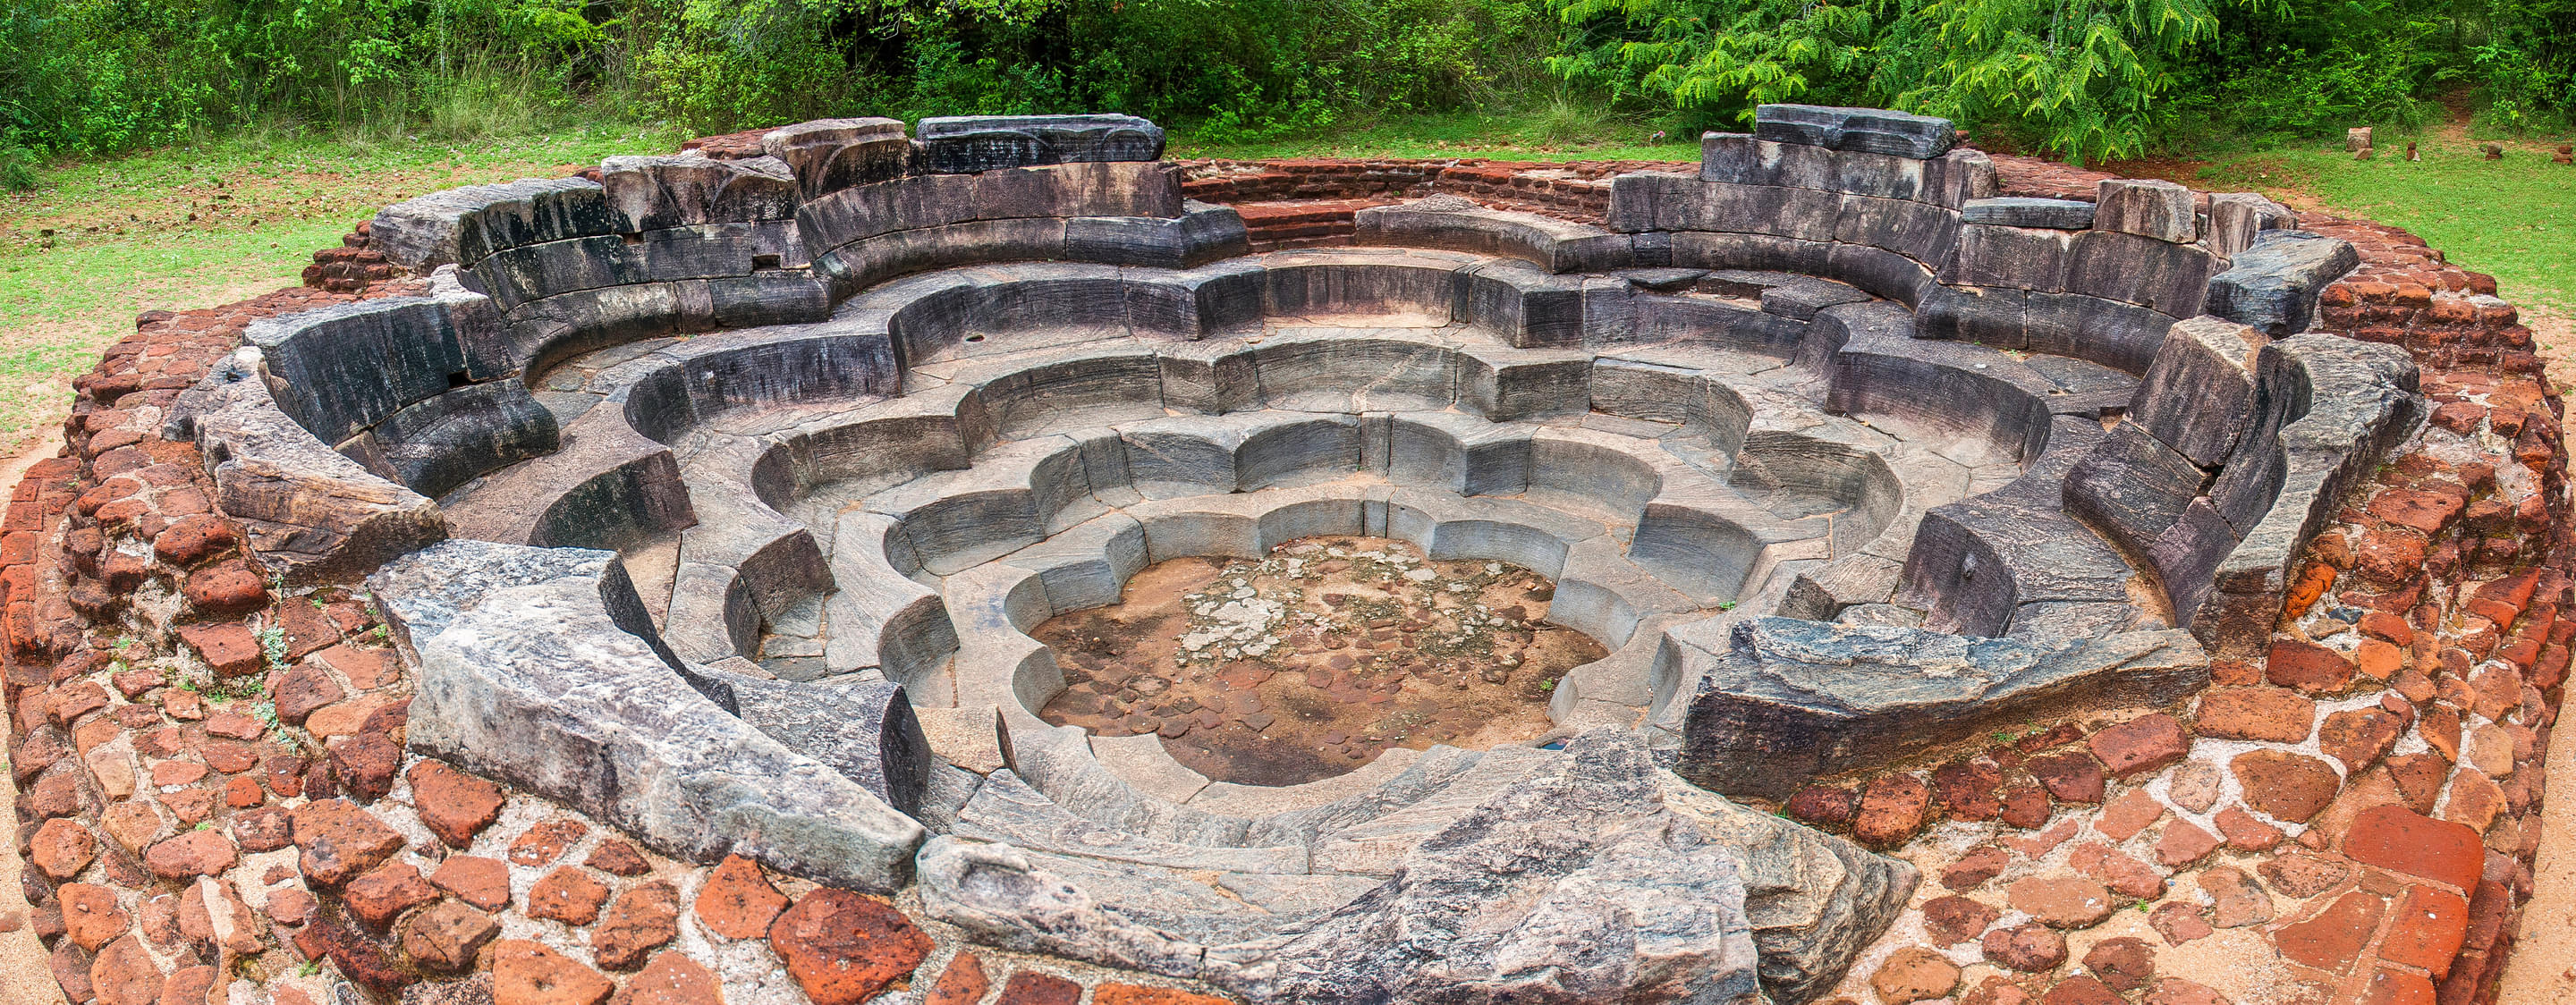 Polonnaruwa Sacred City Overview